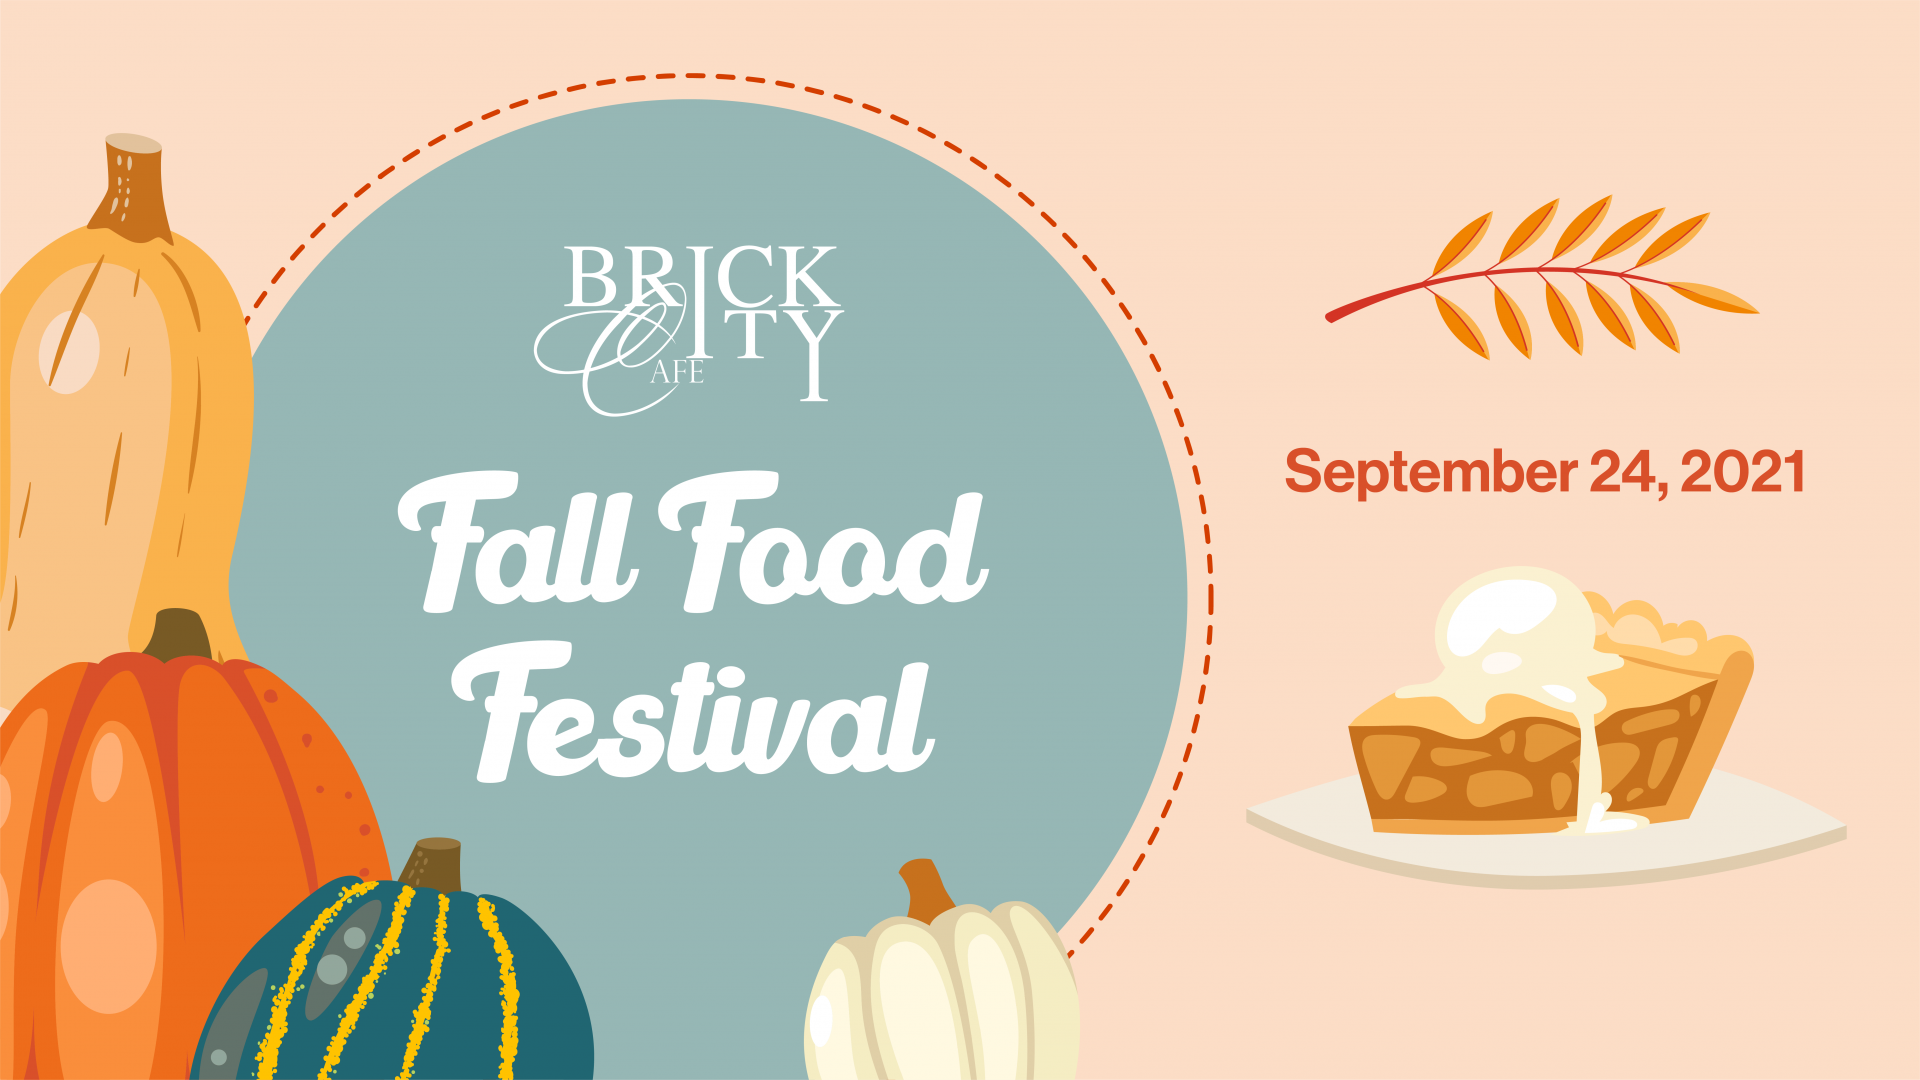 Brick City Cafe Fall Food Festival